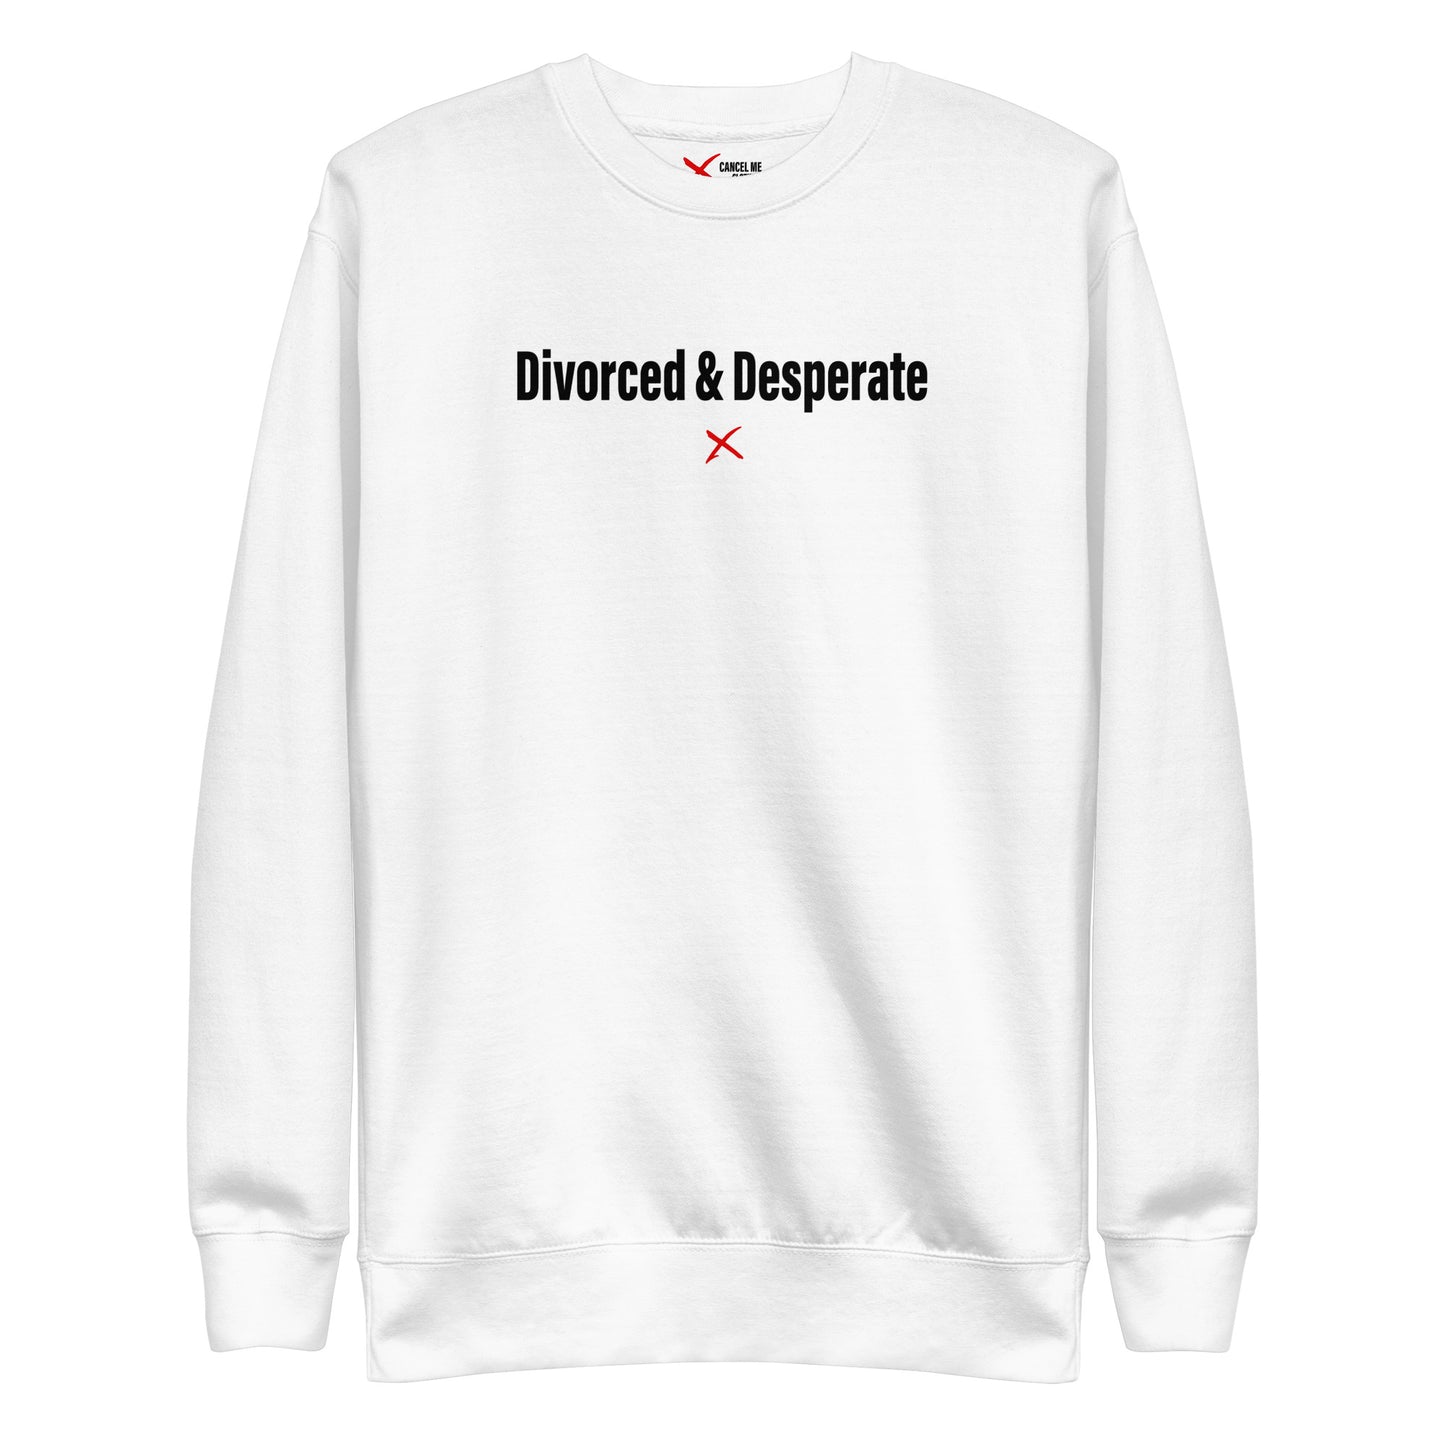 Divorced & Desperate - Sweatshirt